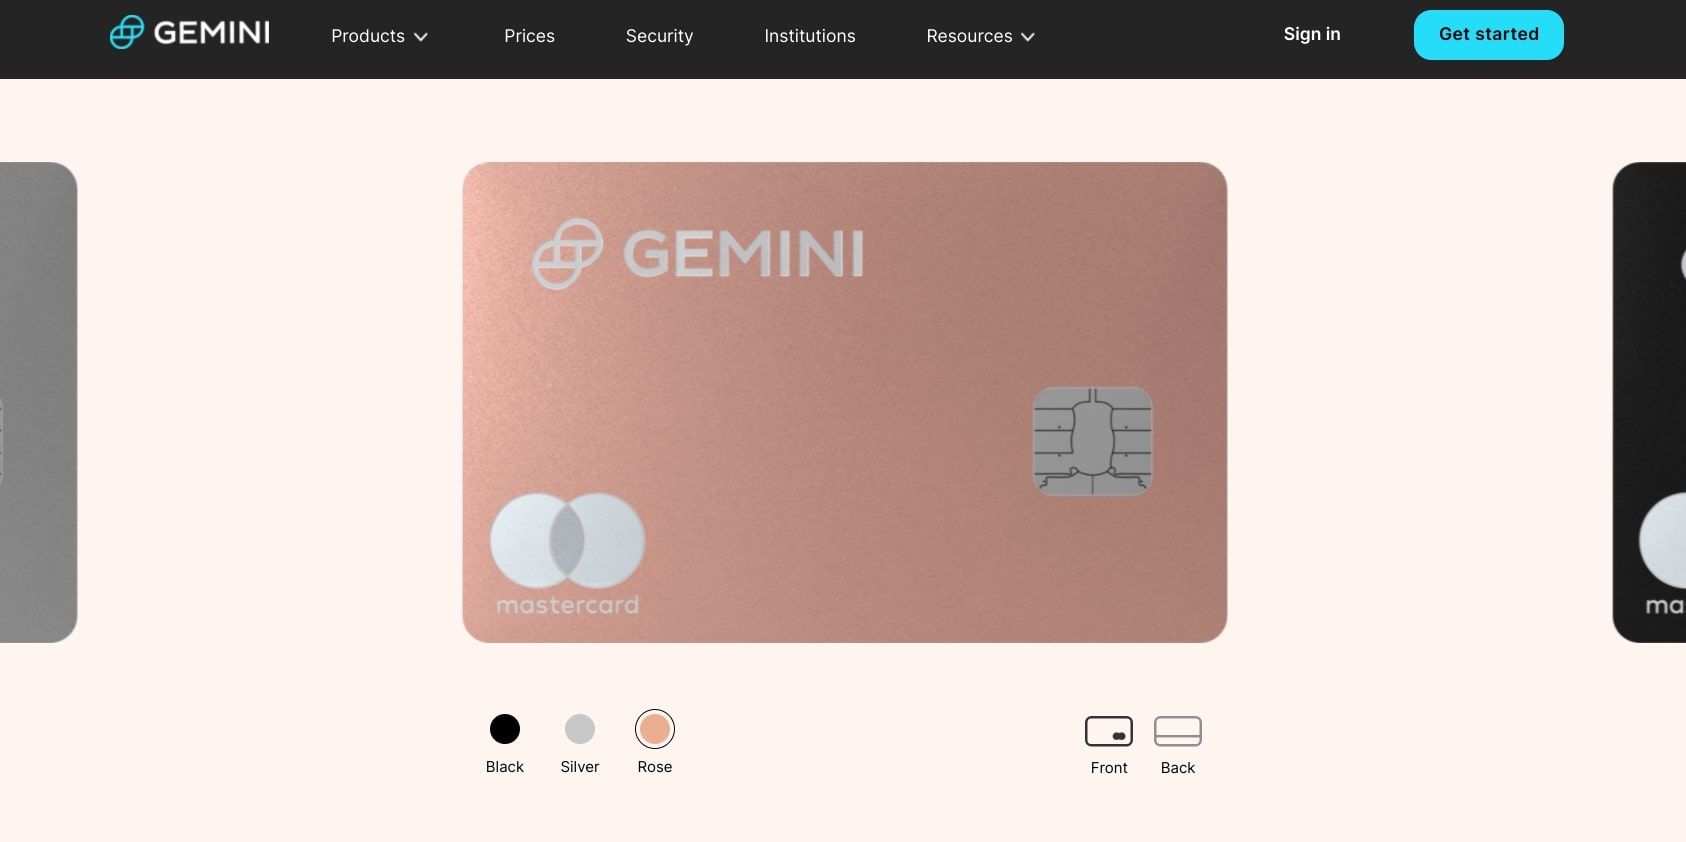 gemini mastercard webpage screenshot